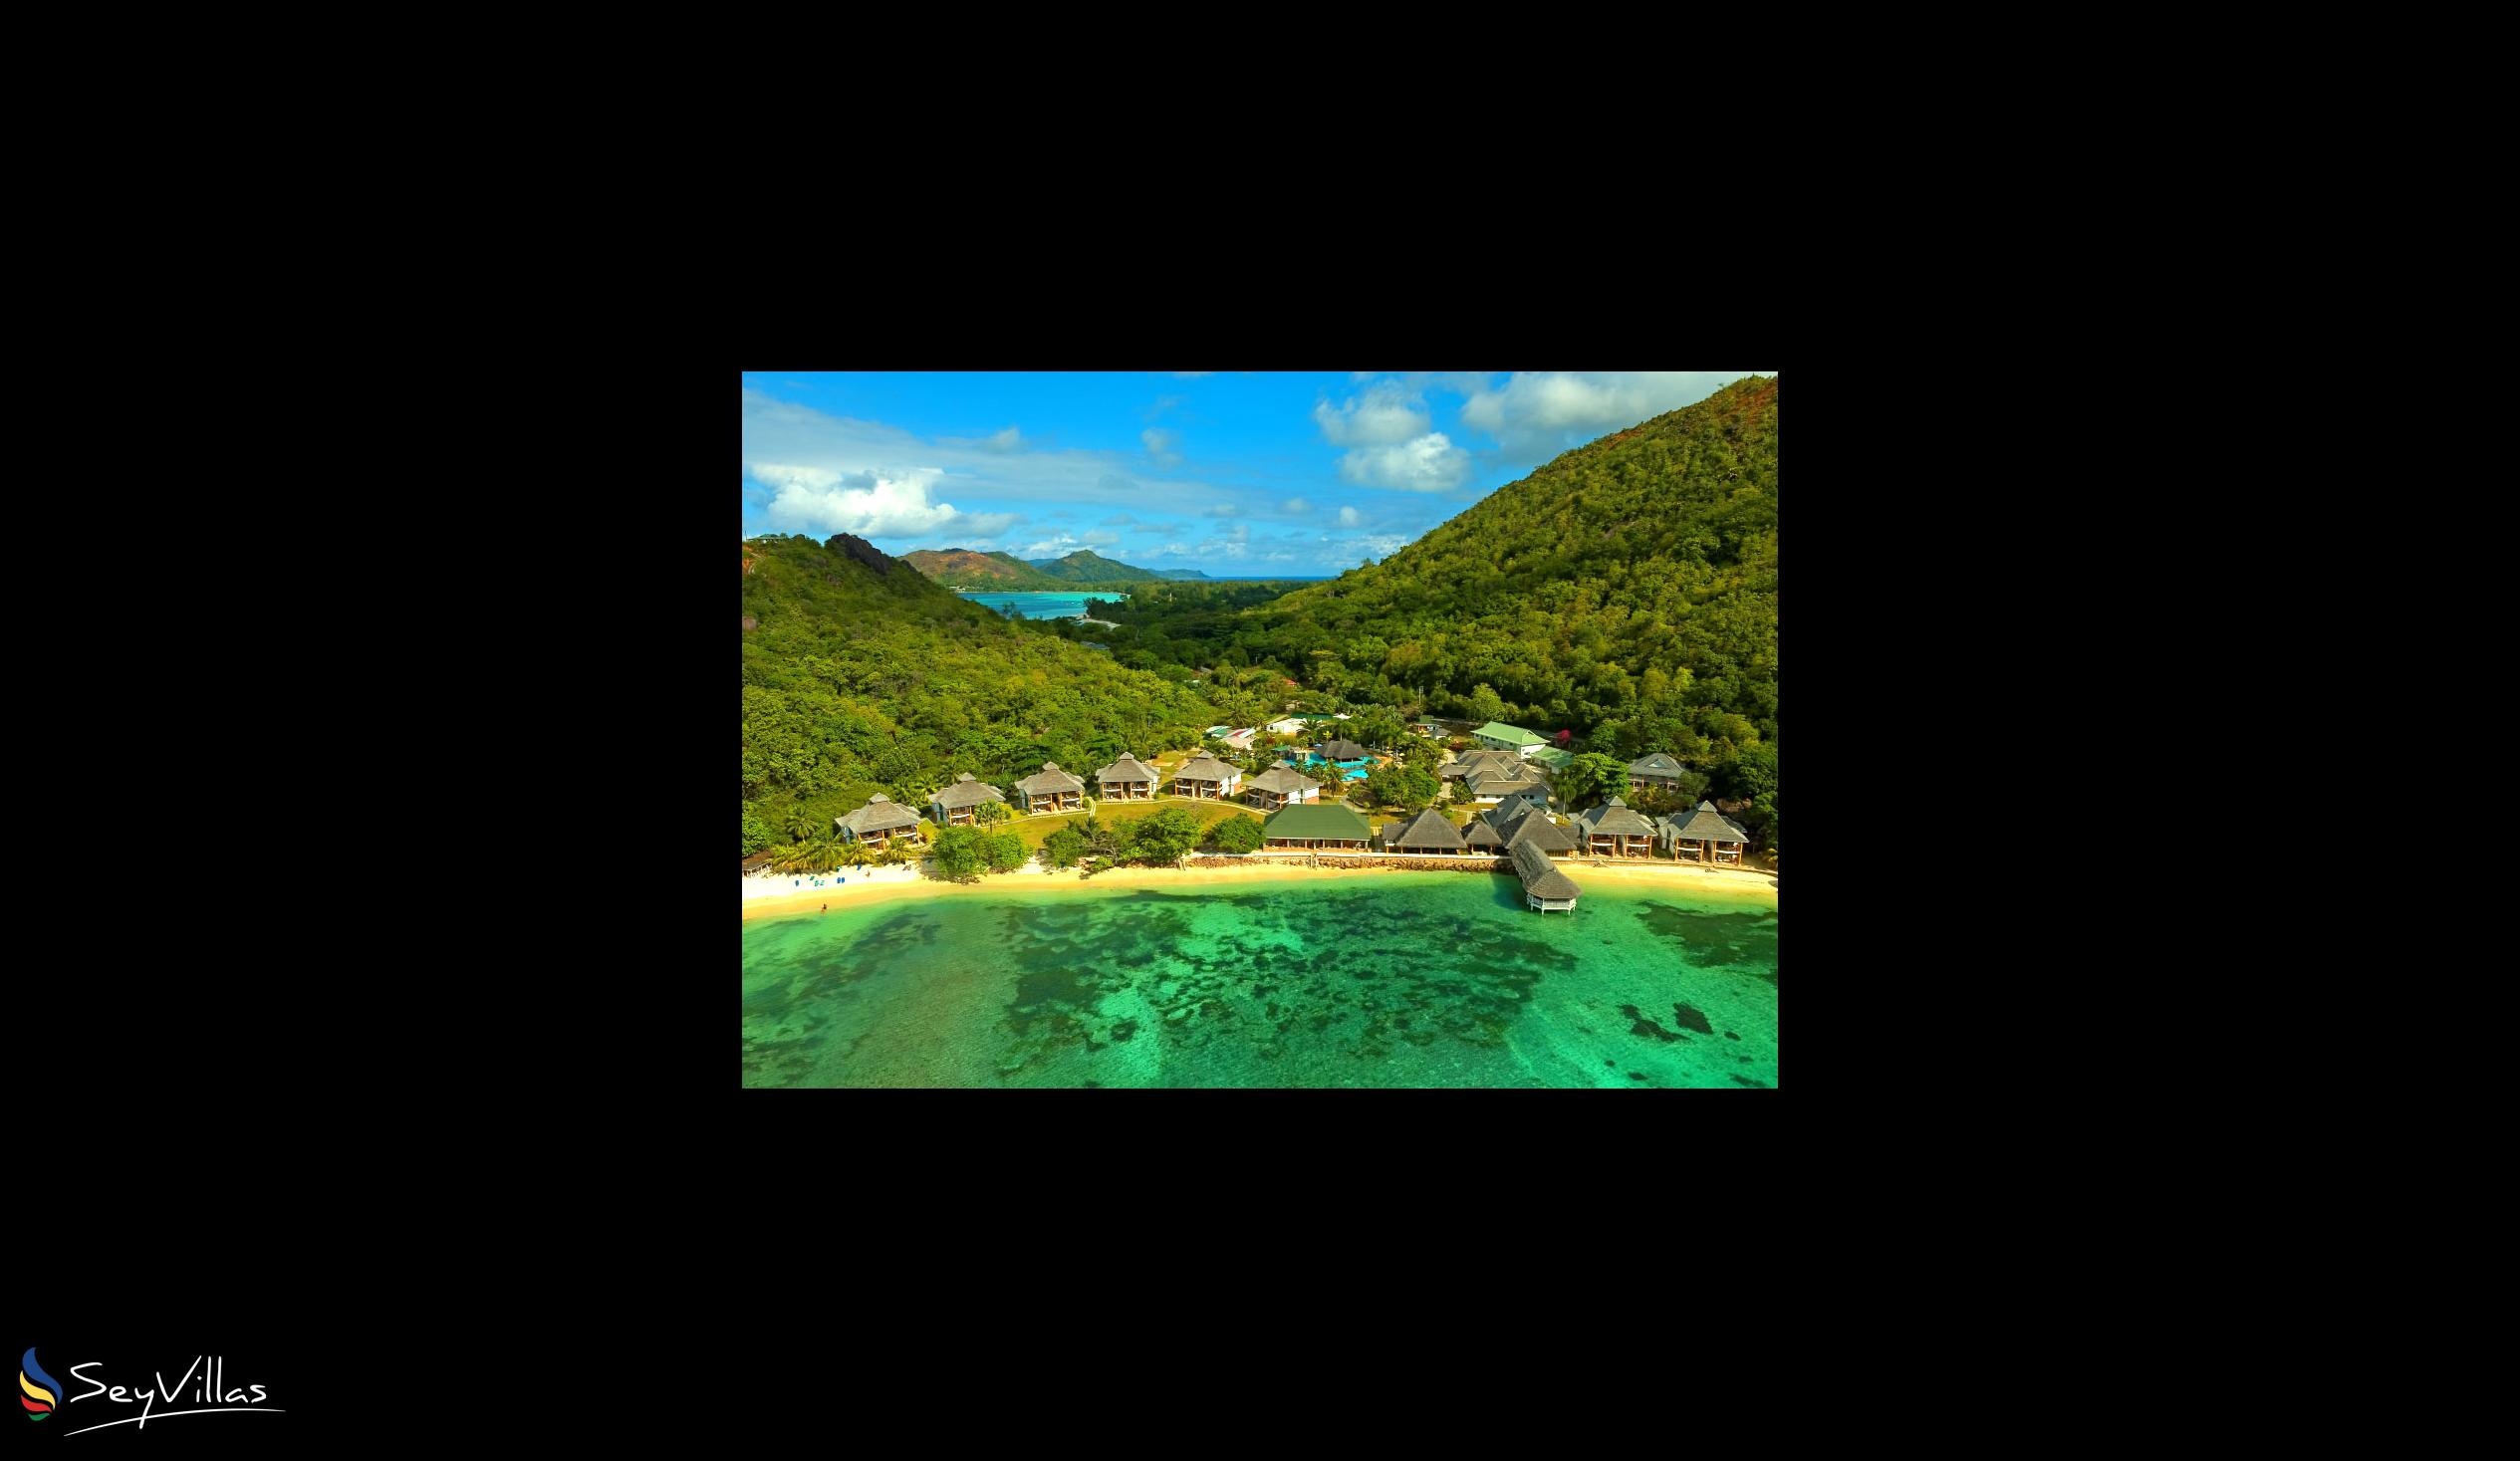 Photo 7: Le Domaine de La Reserve - Outdoor area - Praslin (Seychelles)